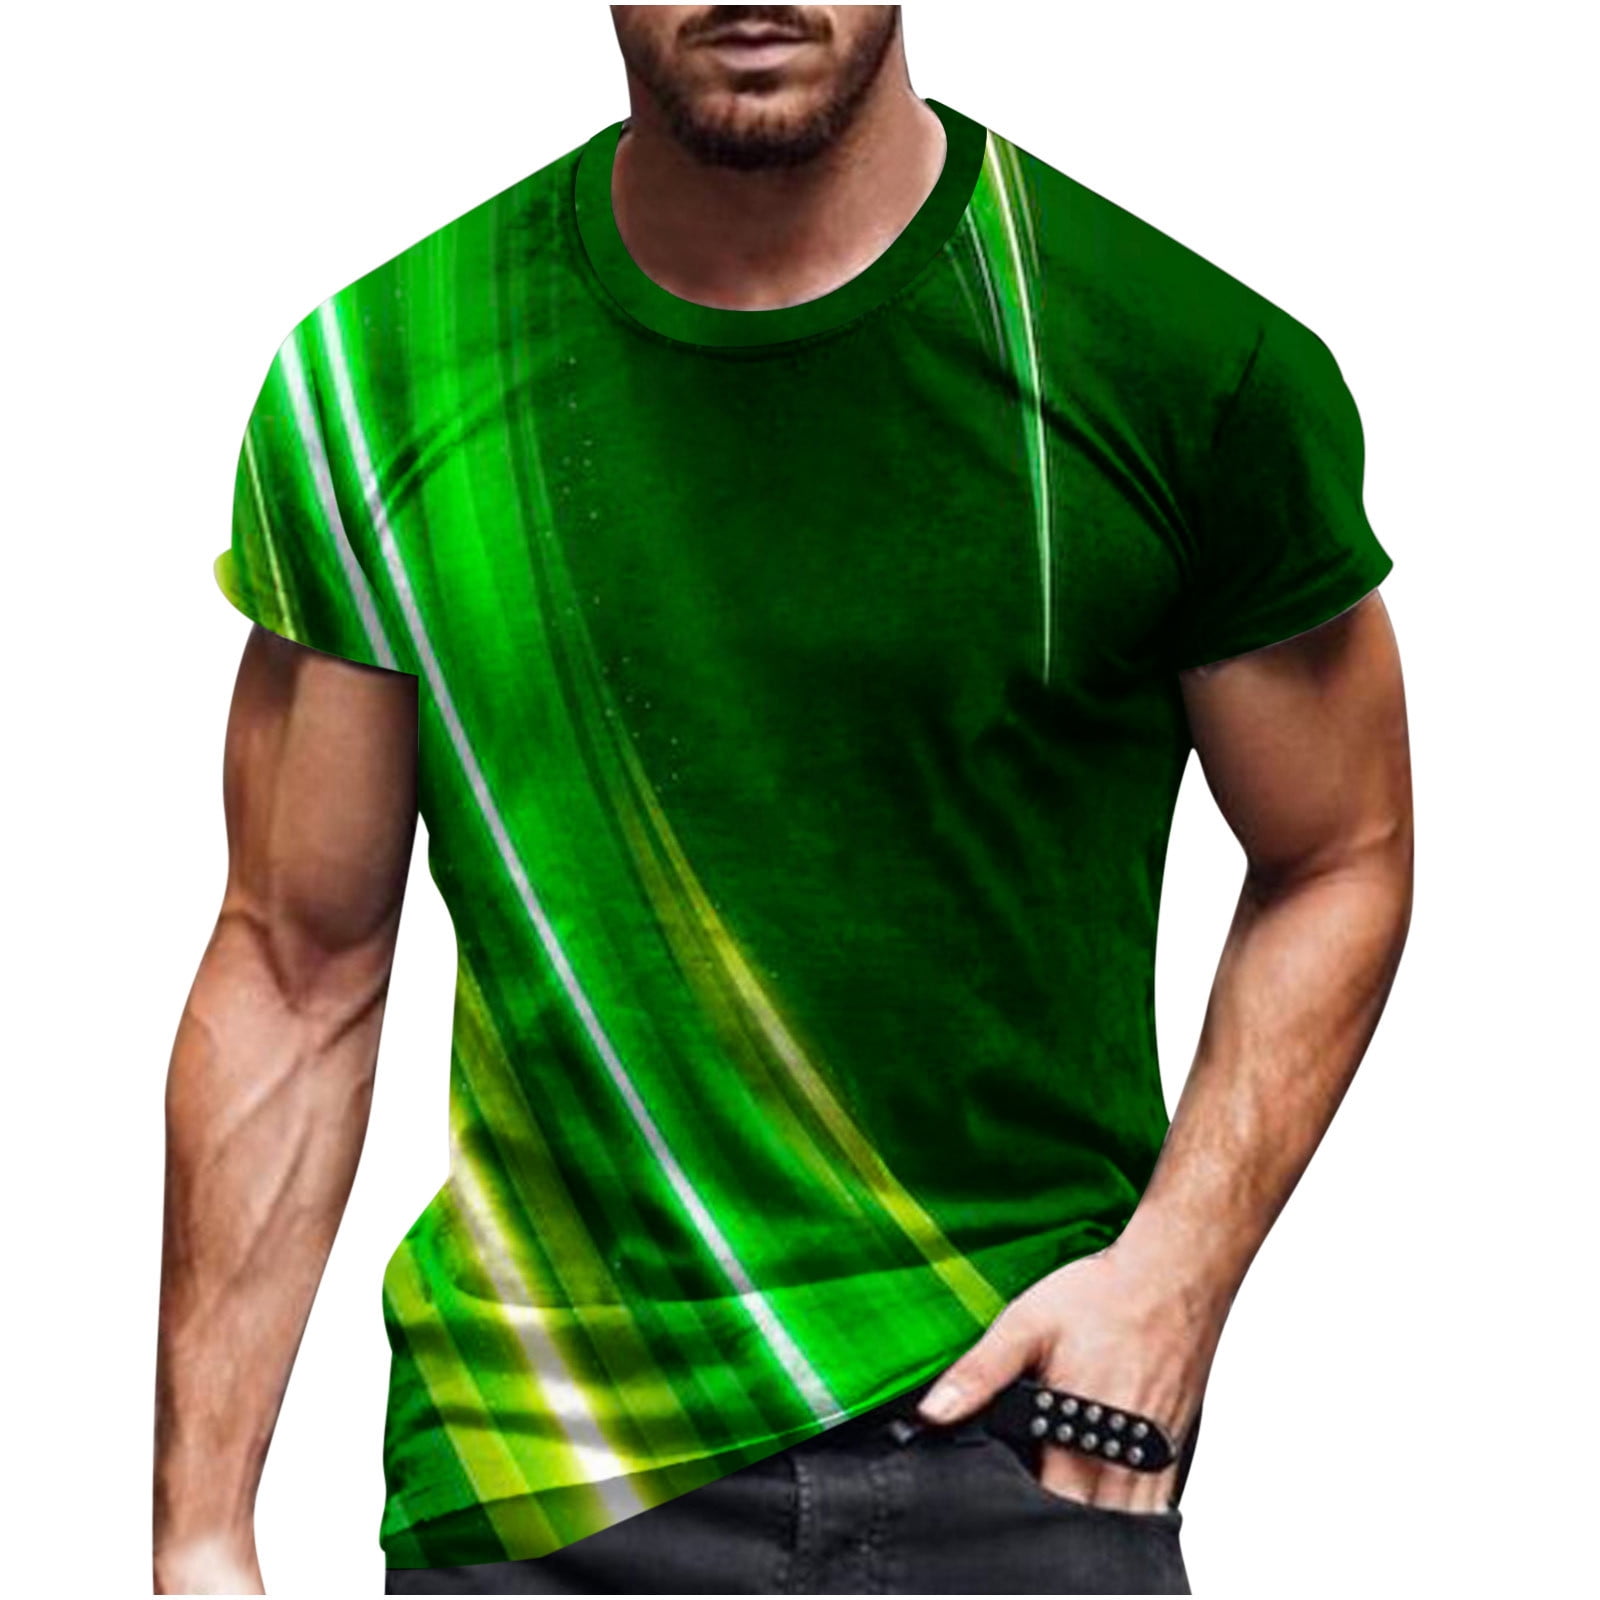 YYDGH 3D Digital Print T-Shirts for Men, Men's Summer Comfy Daily Tops  Short Sleeve Crewneck Tees Casual Cool Athletic Shirts(2#Green,XL) 